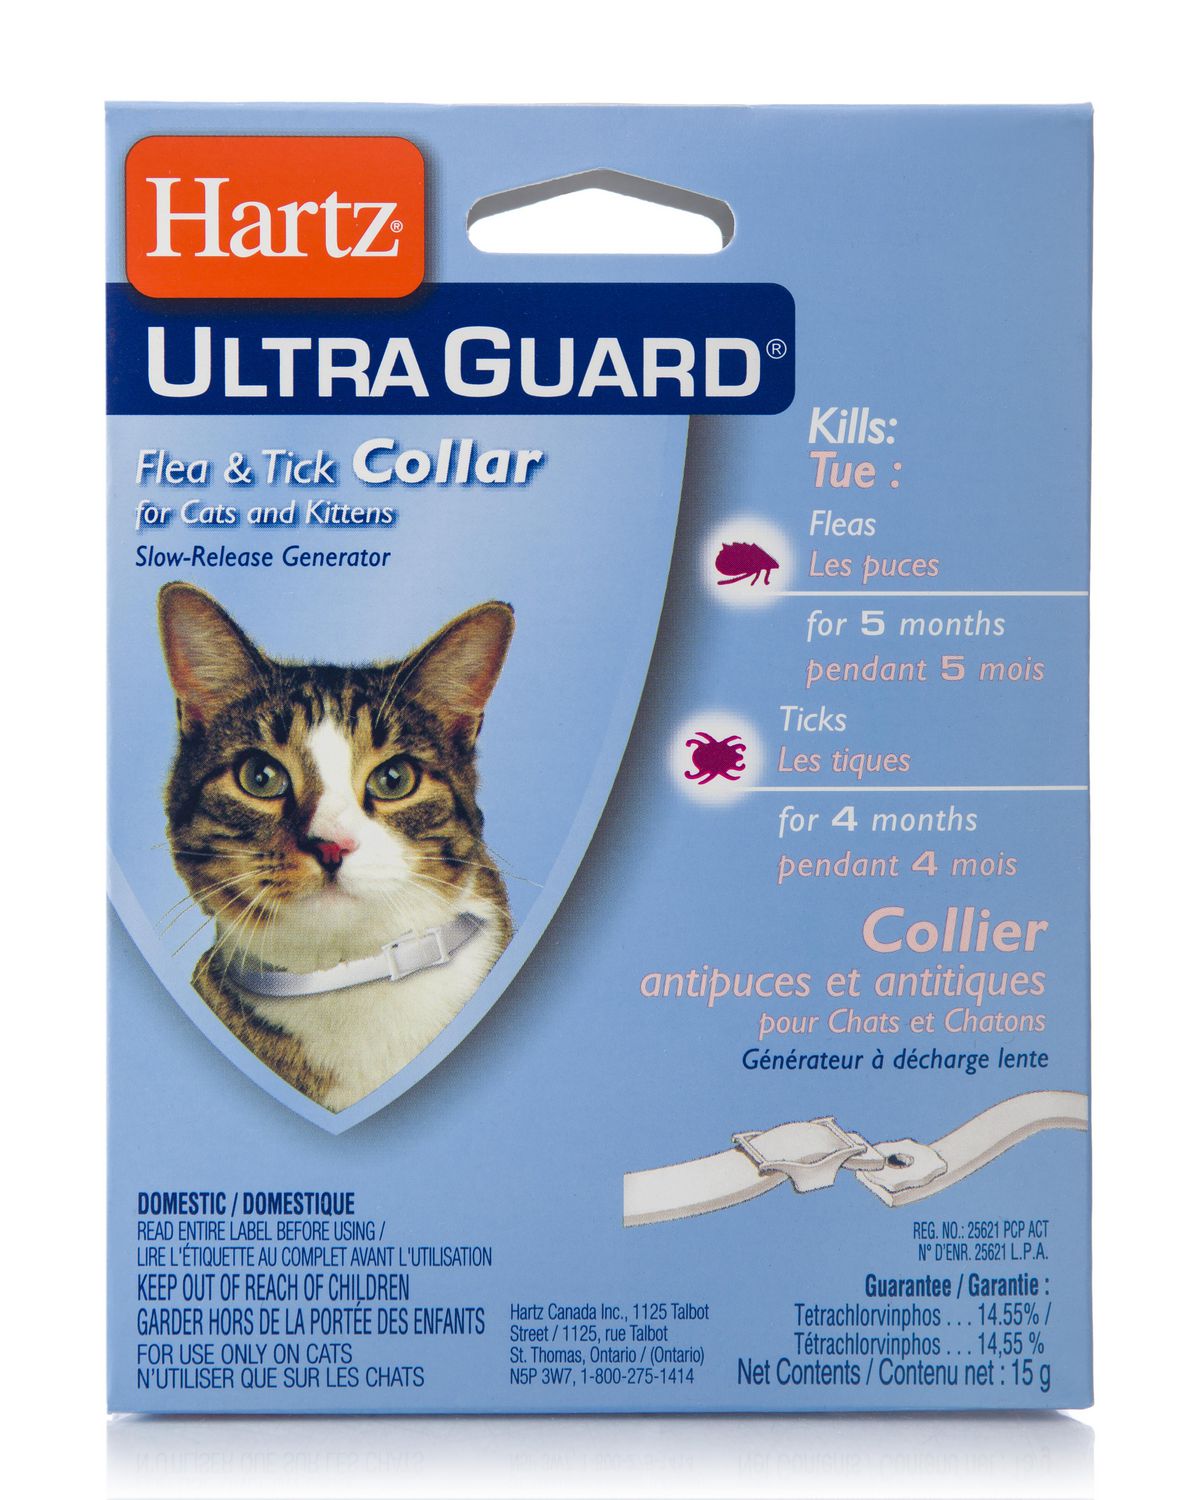 Hartz UltraGuard Flea & Tick Collar for Cats & Kittens at Walmart.ca